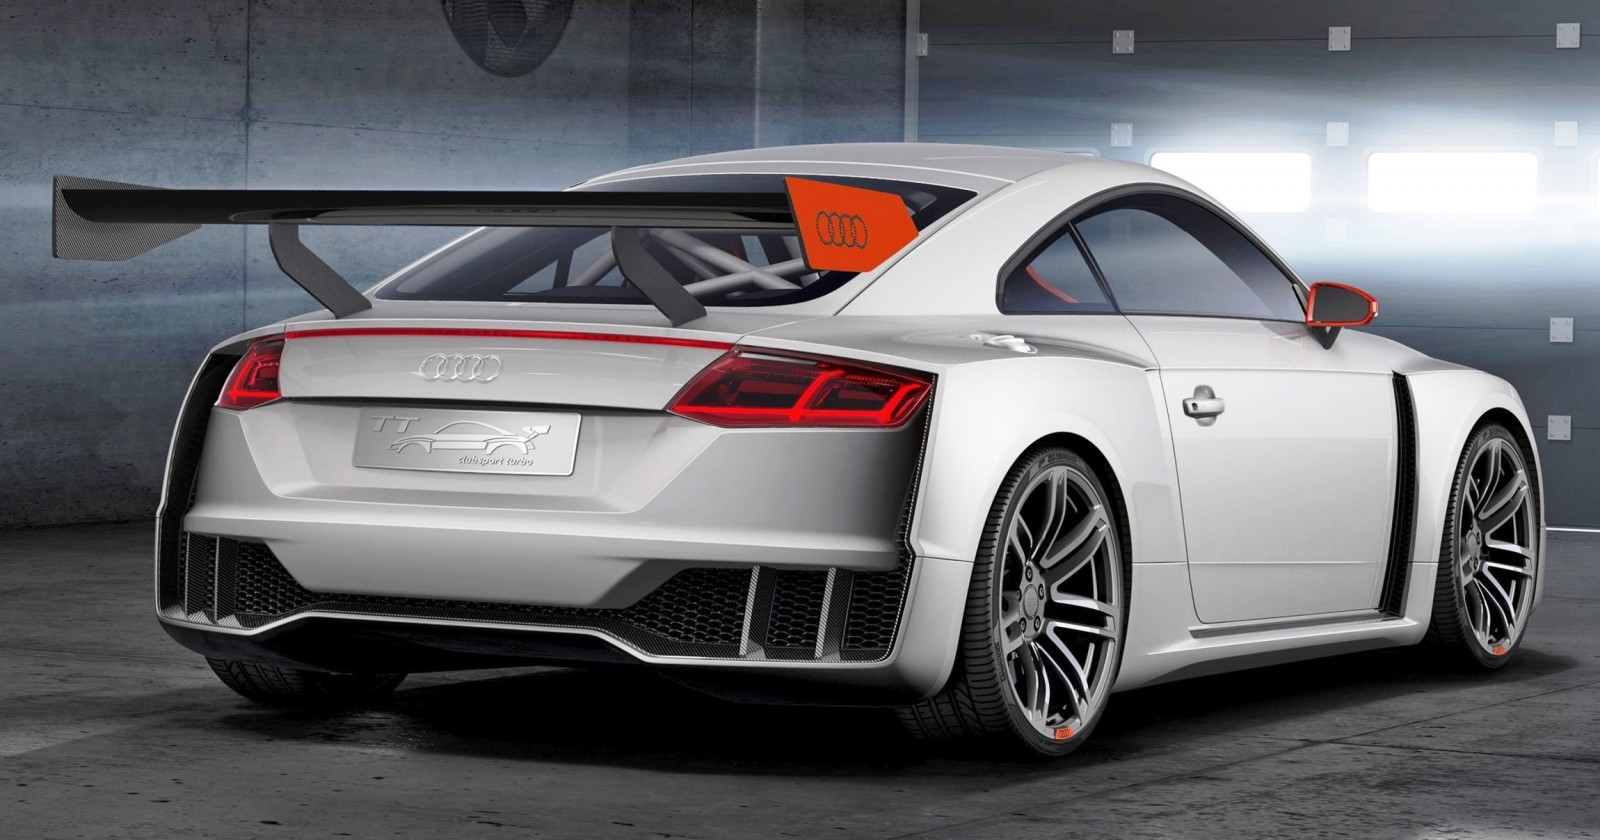 Race Ready Luxury: The 2015 Audi TT Clubsport Turbo Concept